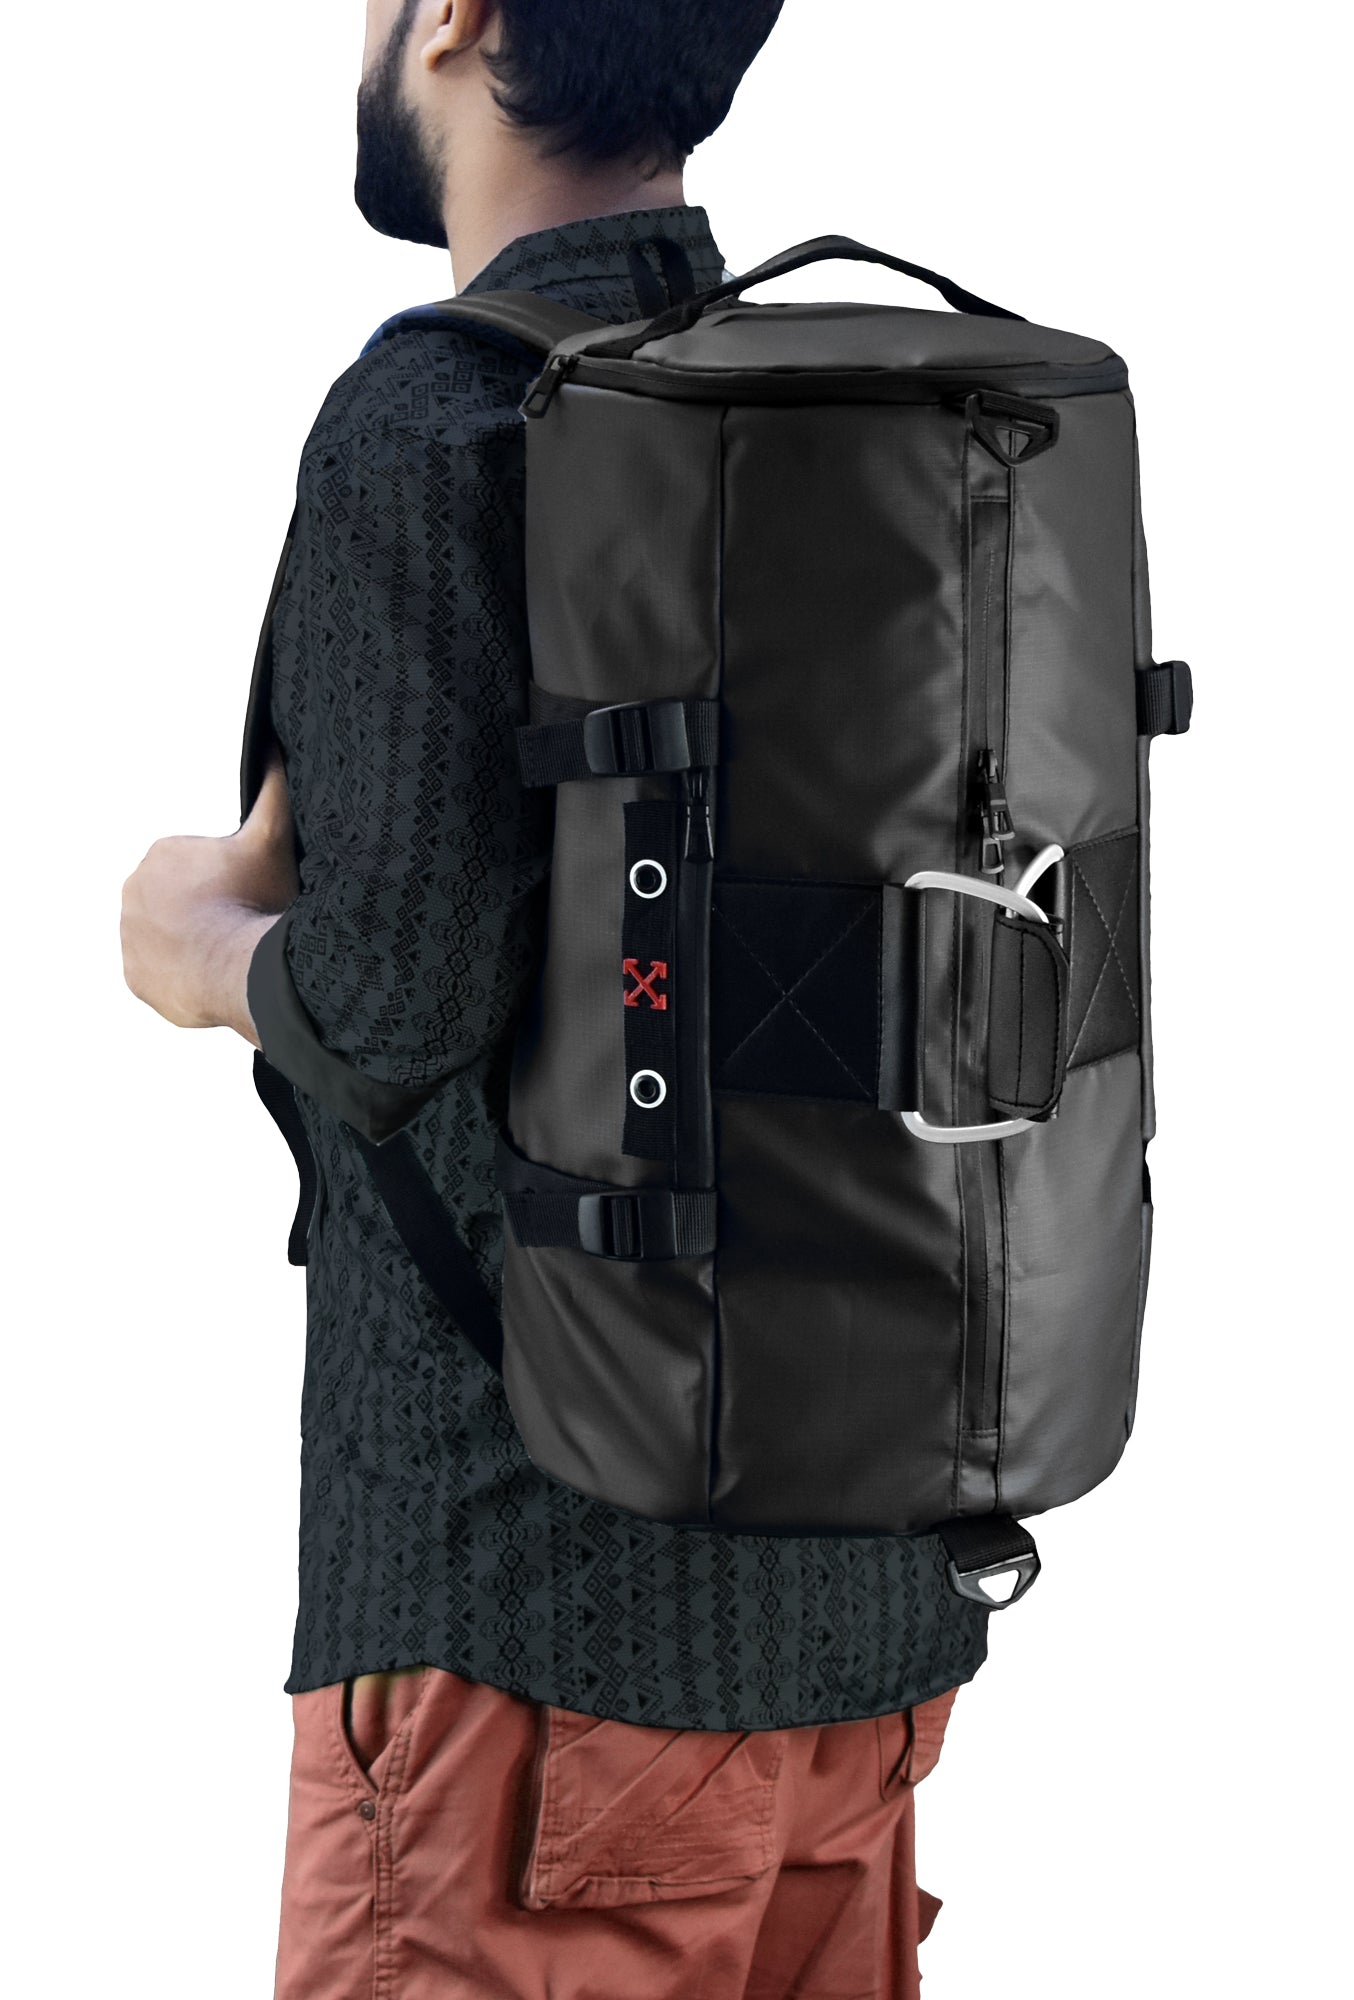 New Generation 4in1 Bag Black | Travel Bag | Gym Bag | Waterproof